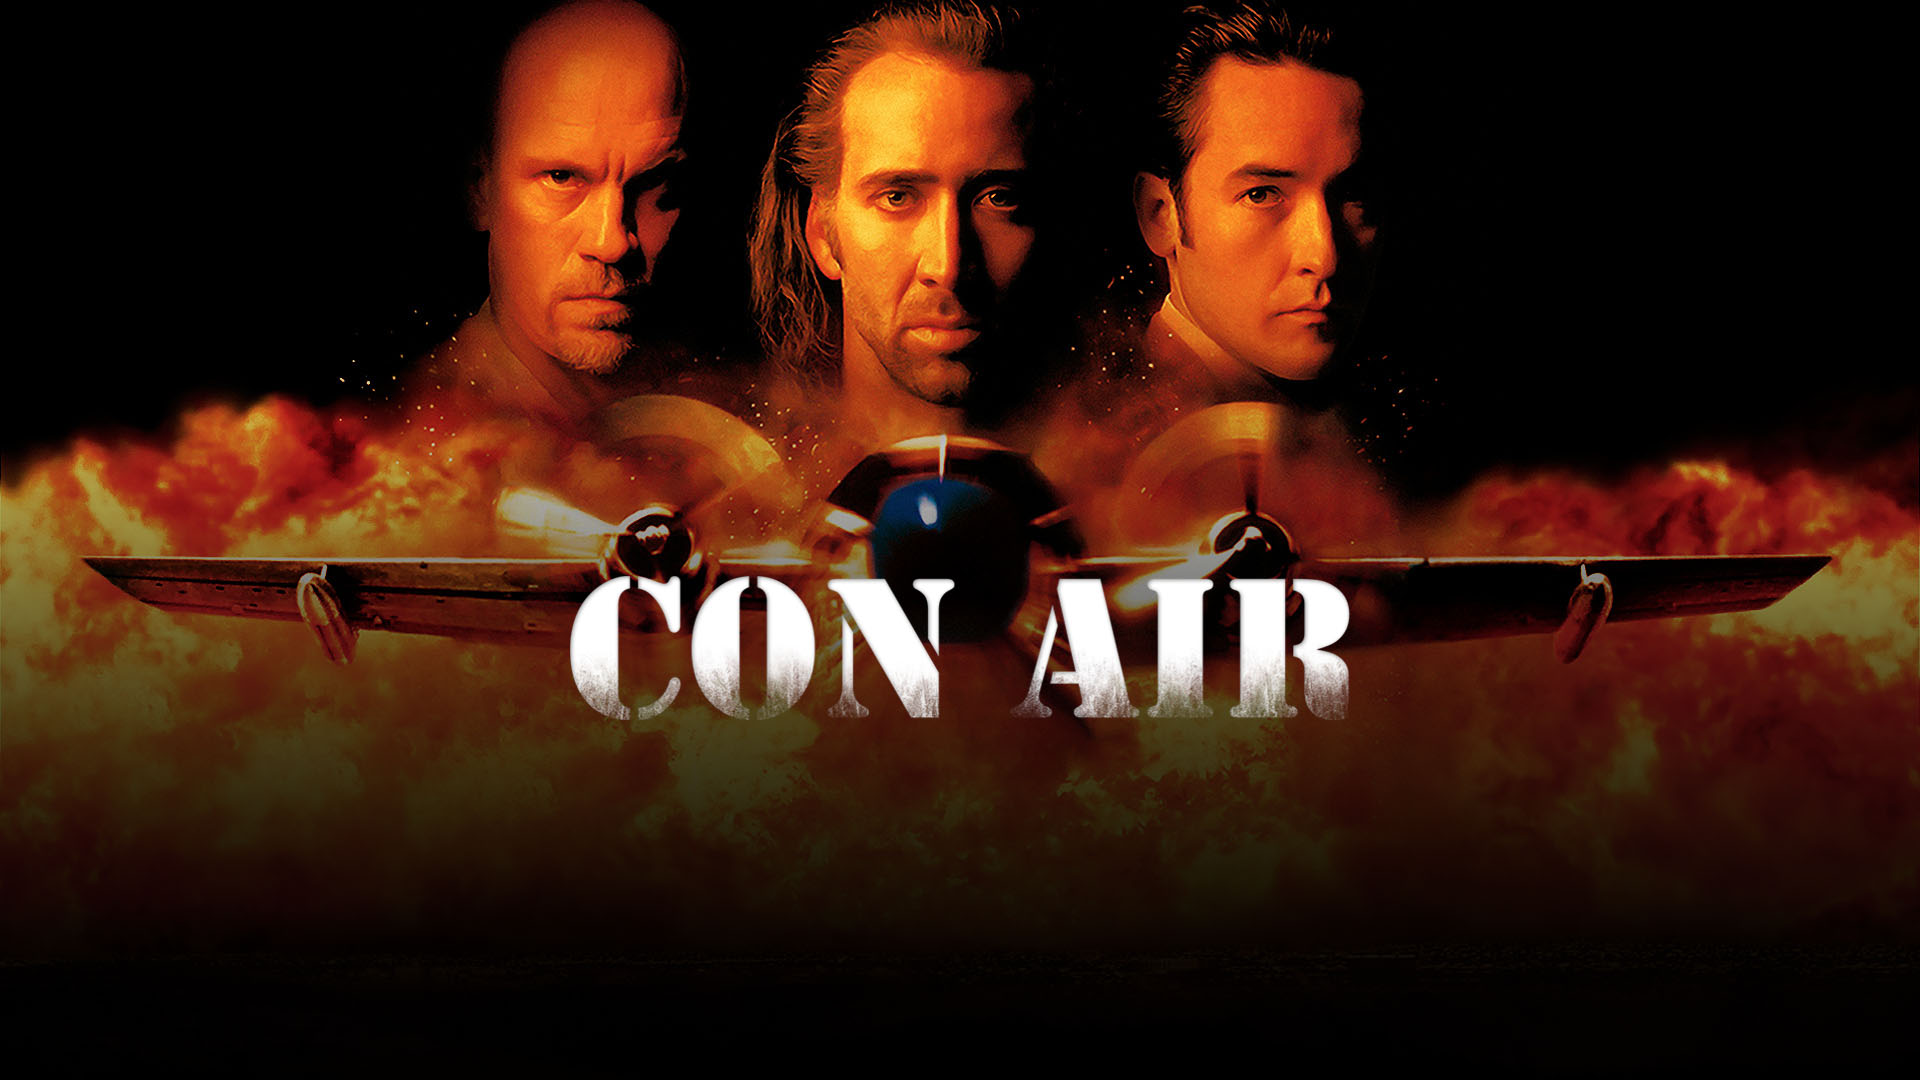 Watch Con Air Online | Stream Full Movies